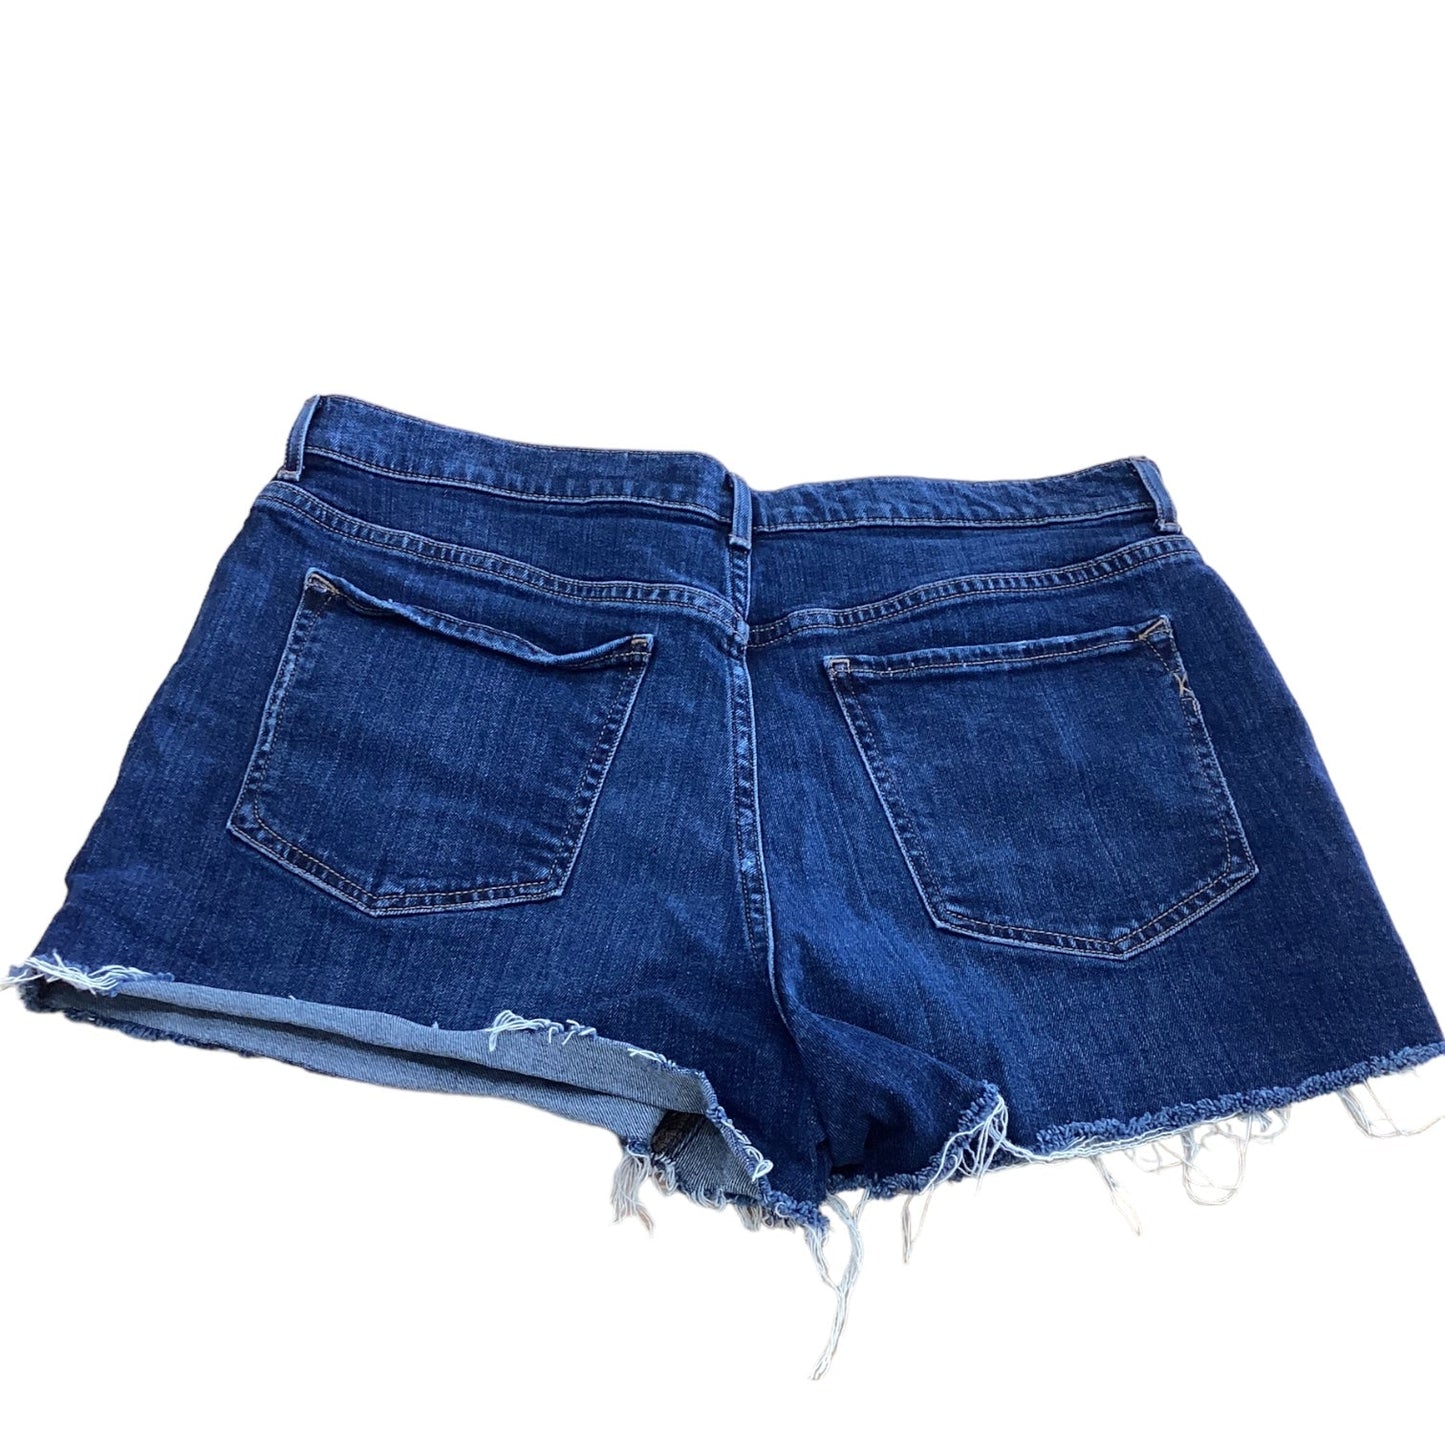 Blue Denim Shorts Express, Size 14